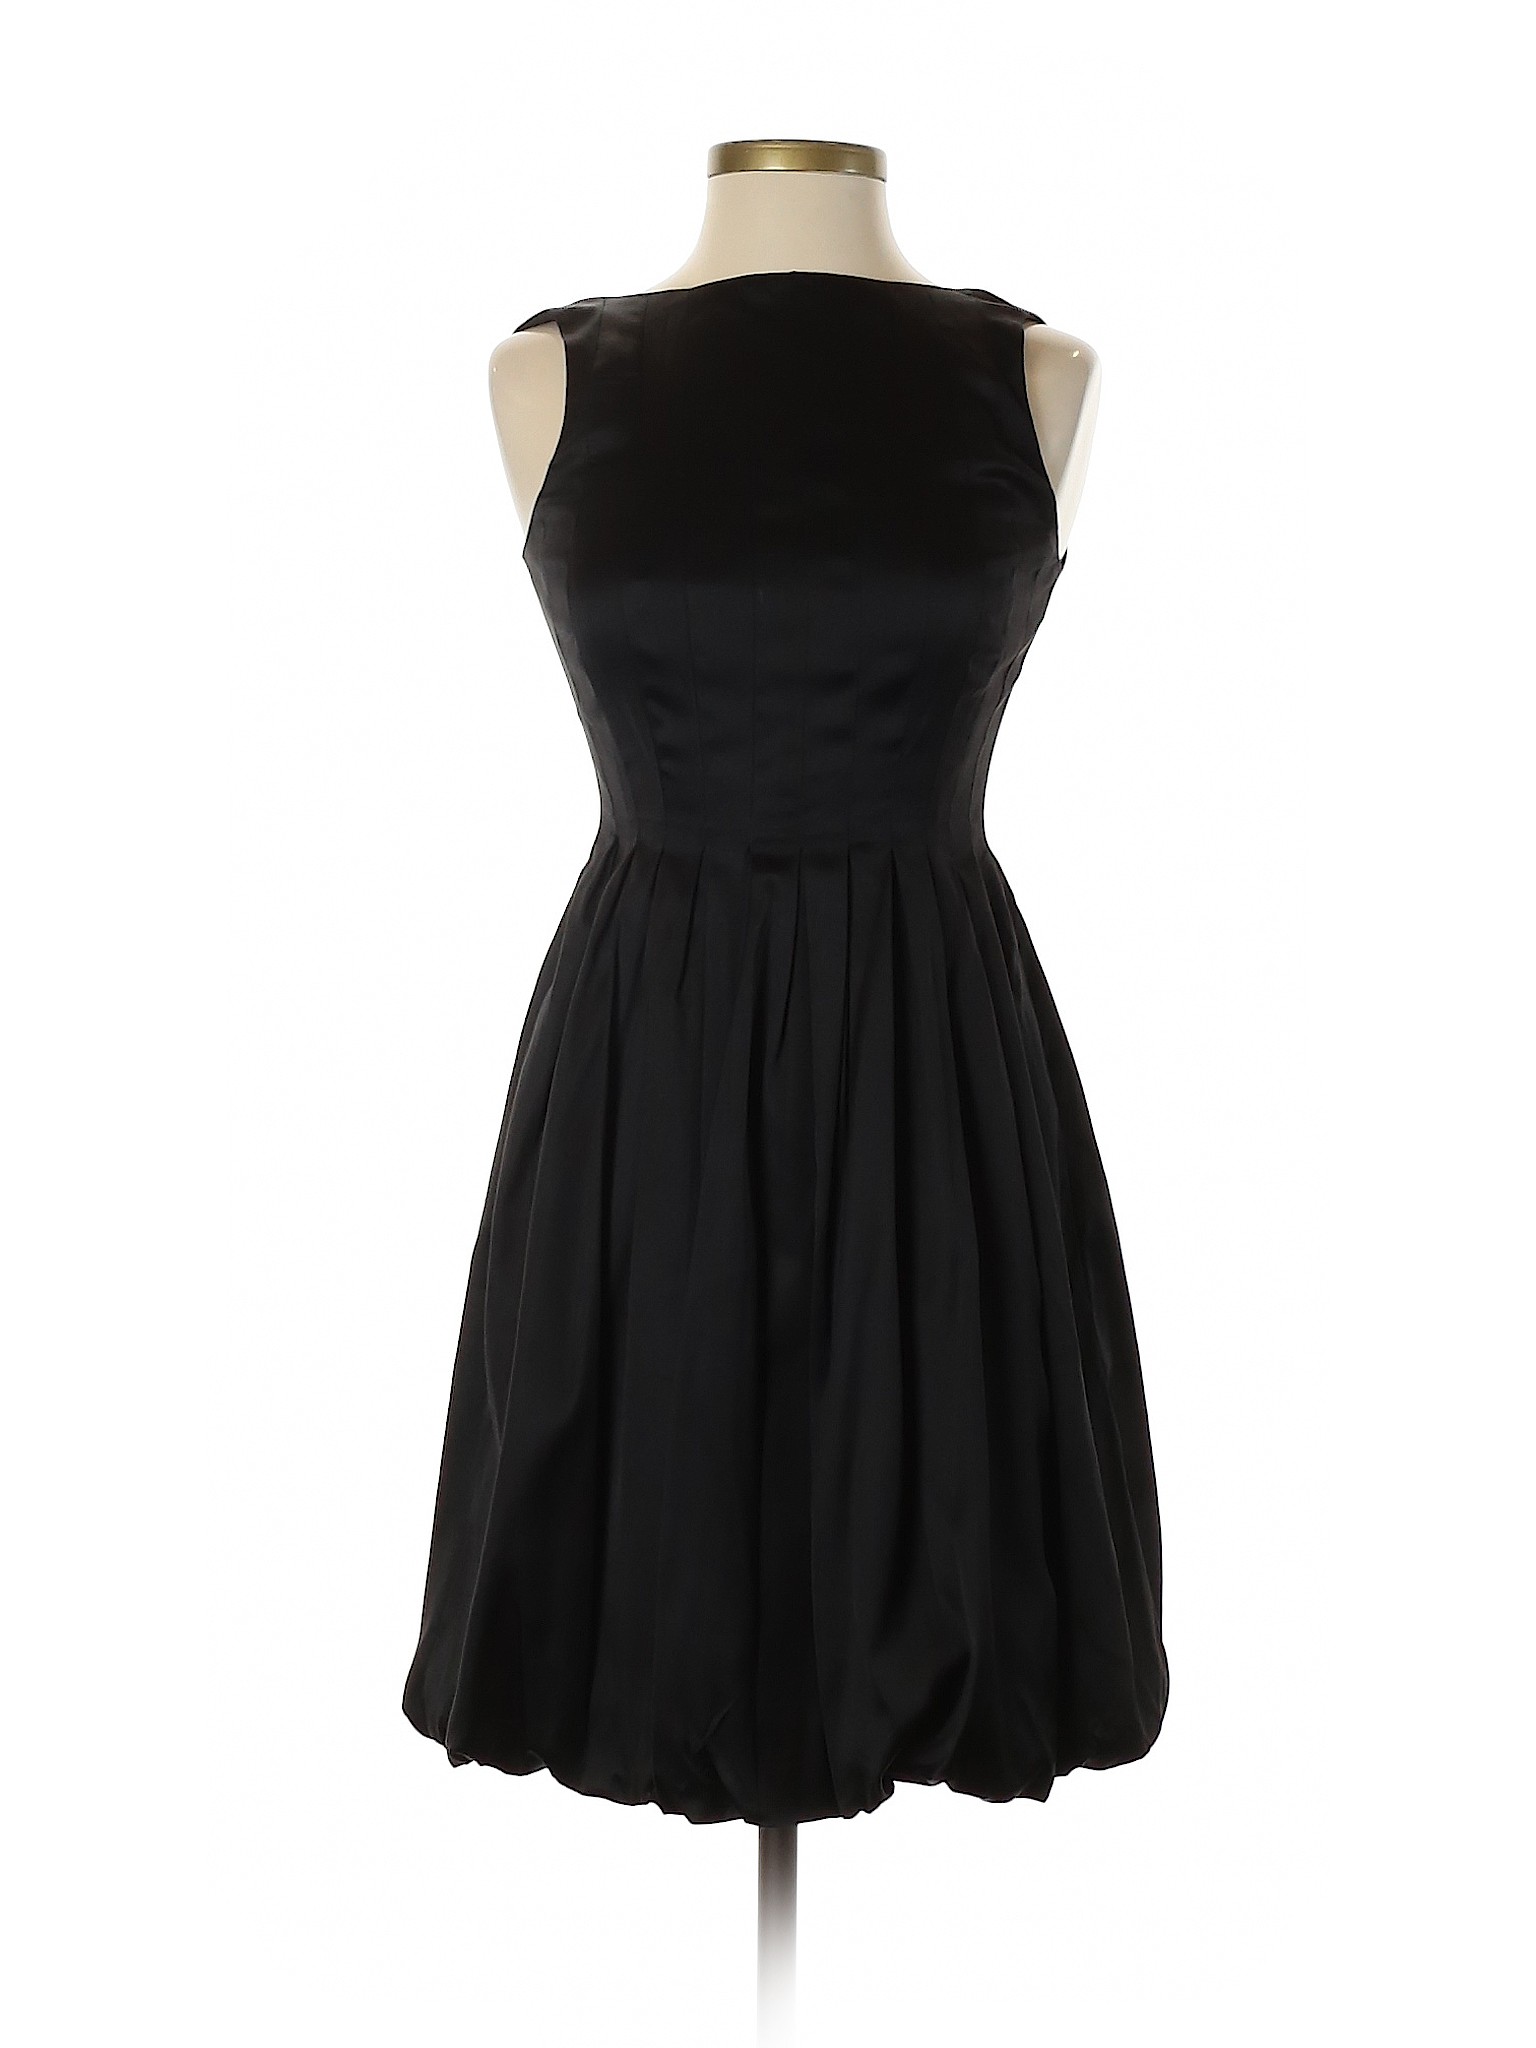 Details about Maggy London Women Black Casual Dress 2 Petite